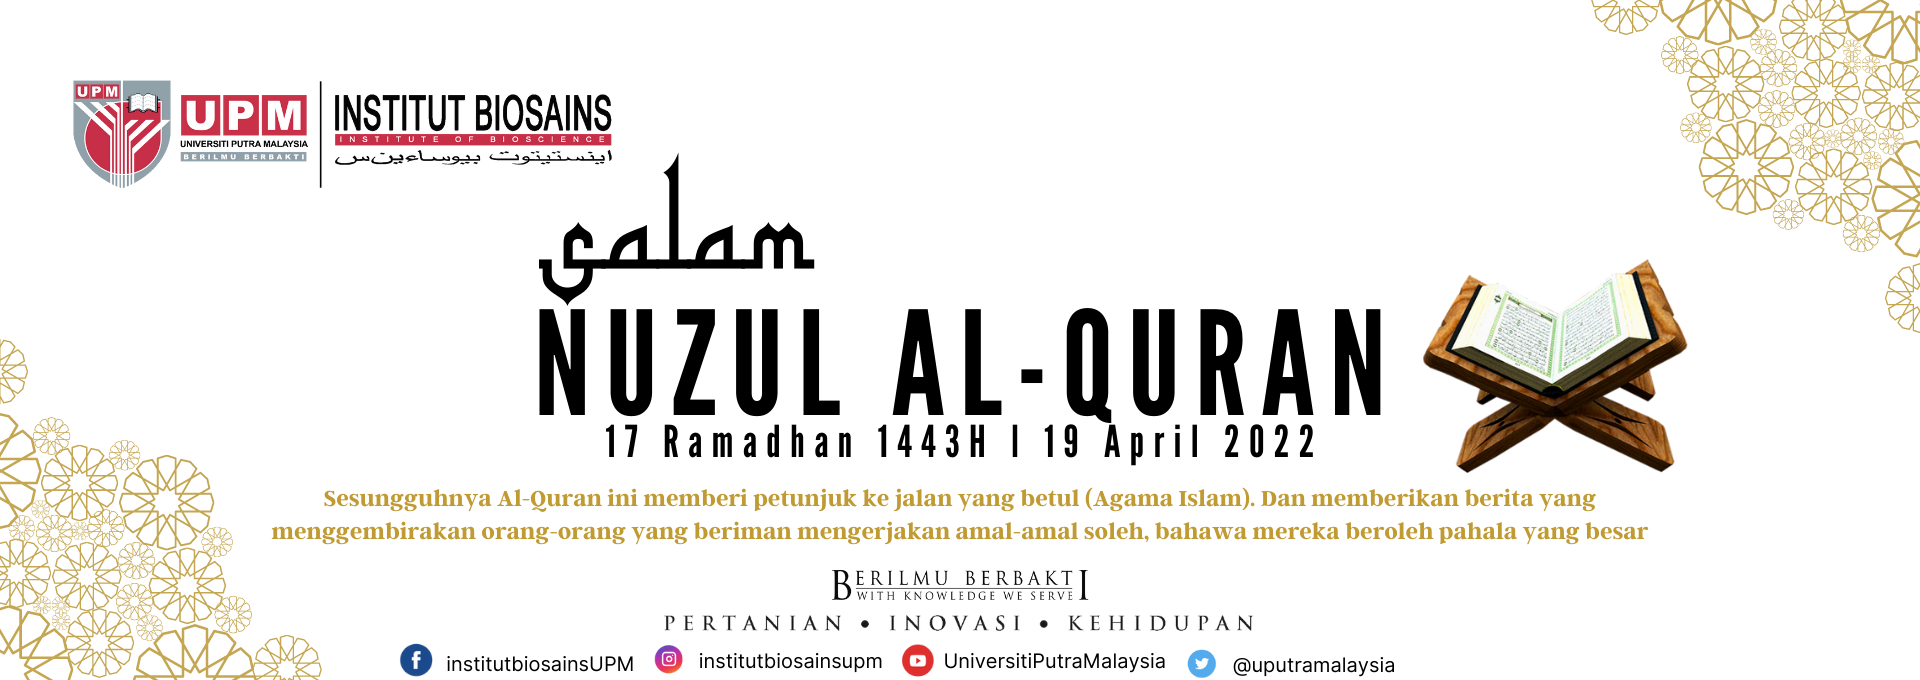 Salam Nuzul Al-Quran 1443H